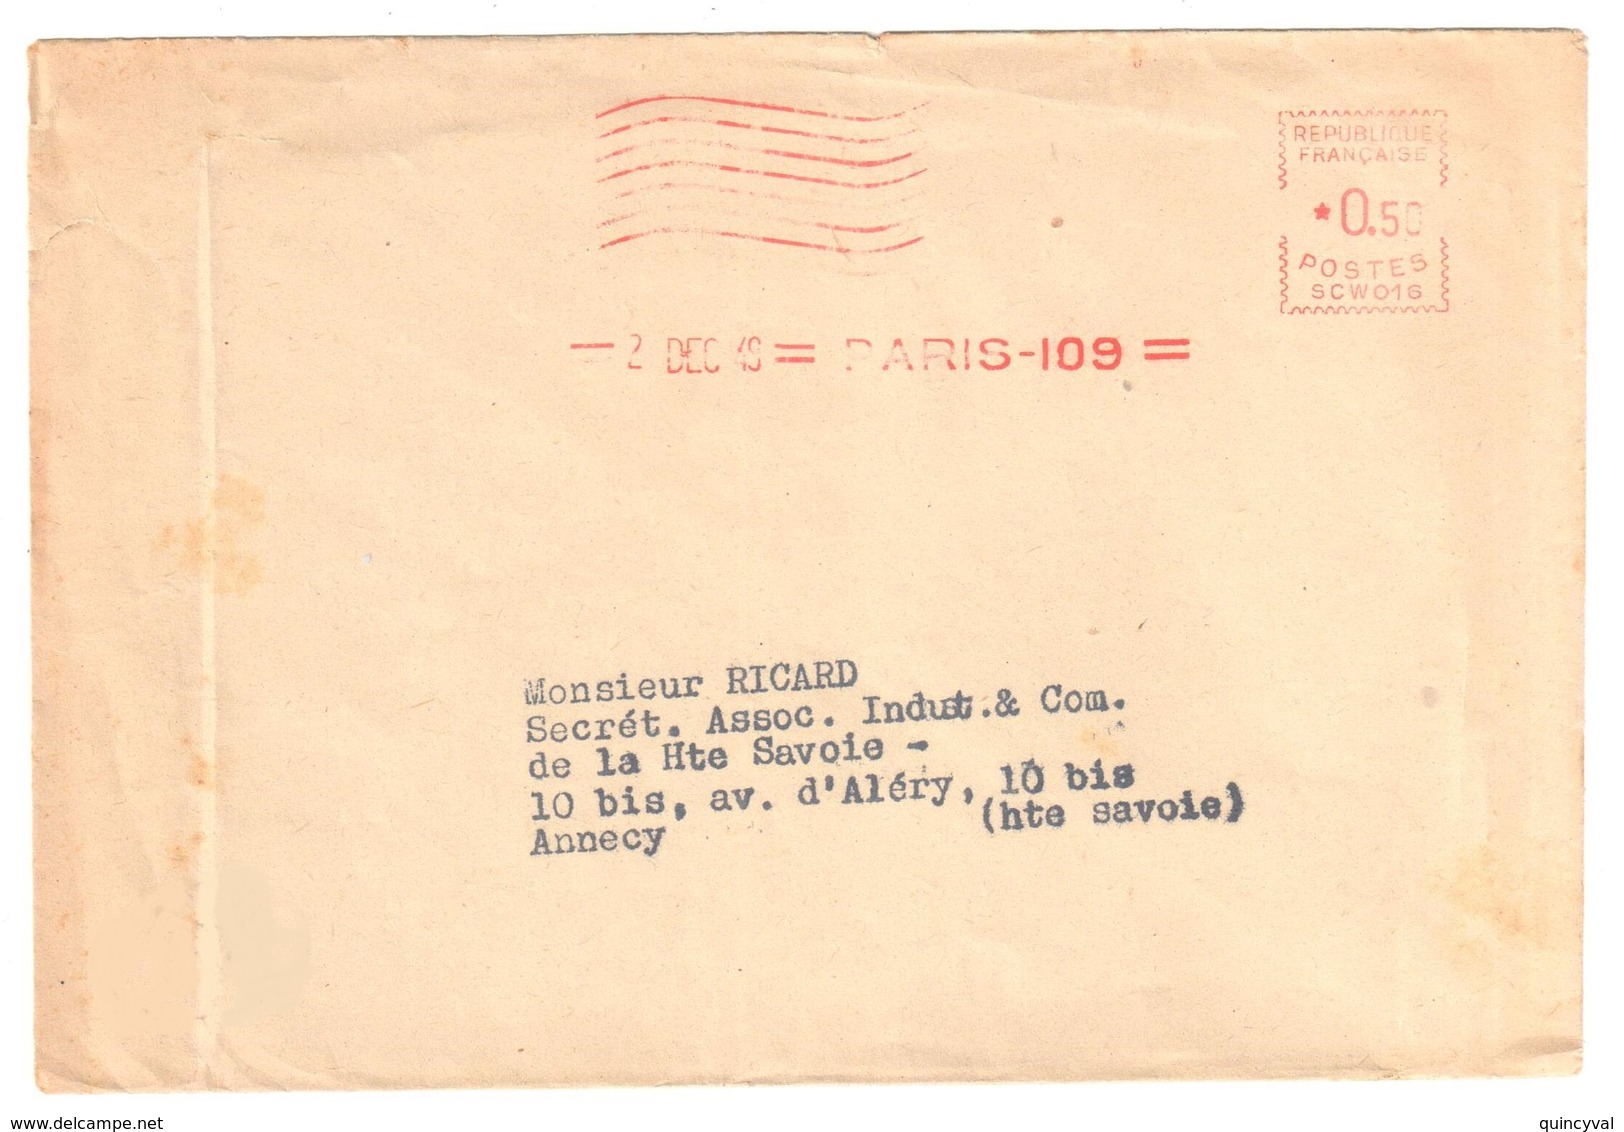 PARIS 109 Enveloppe Journal Sous Enveloppe 50c Ob 2 12 1949  EMA SCW016 - Affrancature Meccaniche Rosse (EMA)